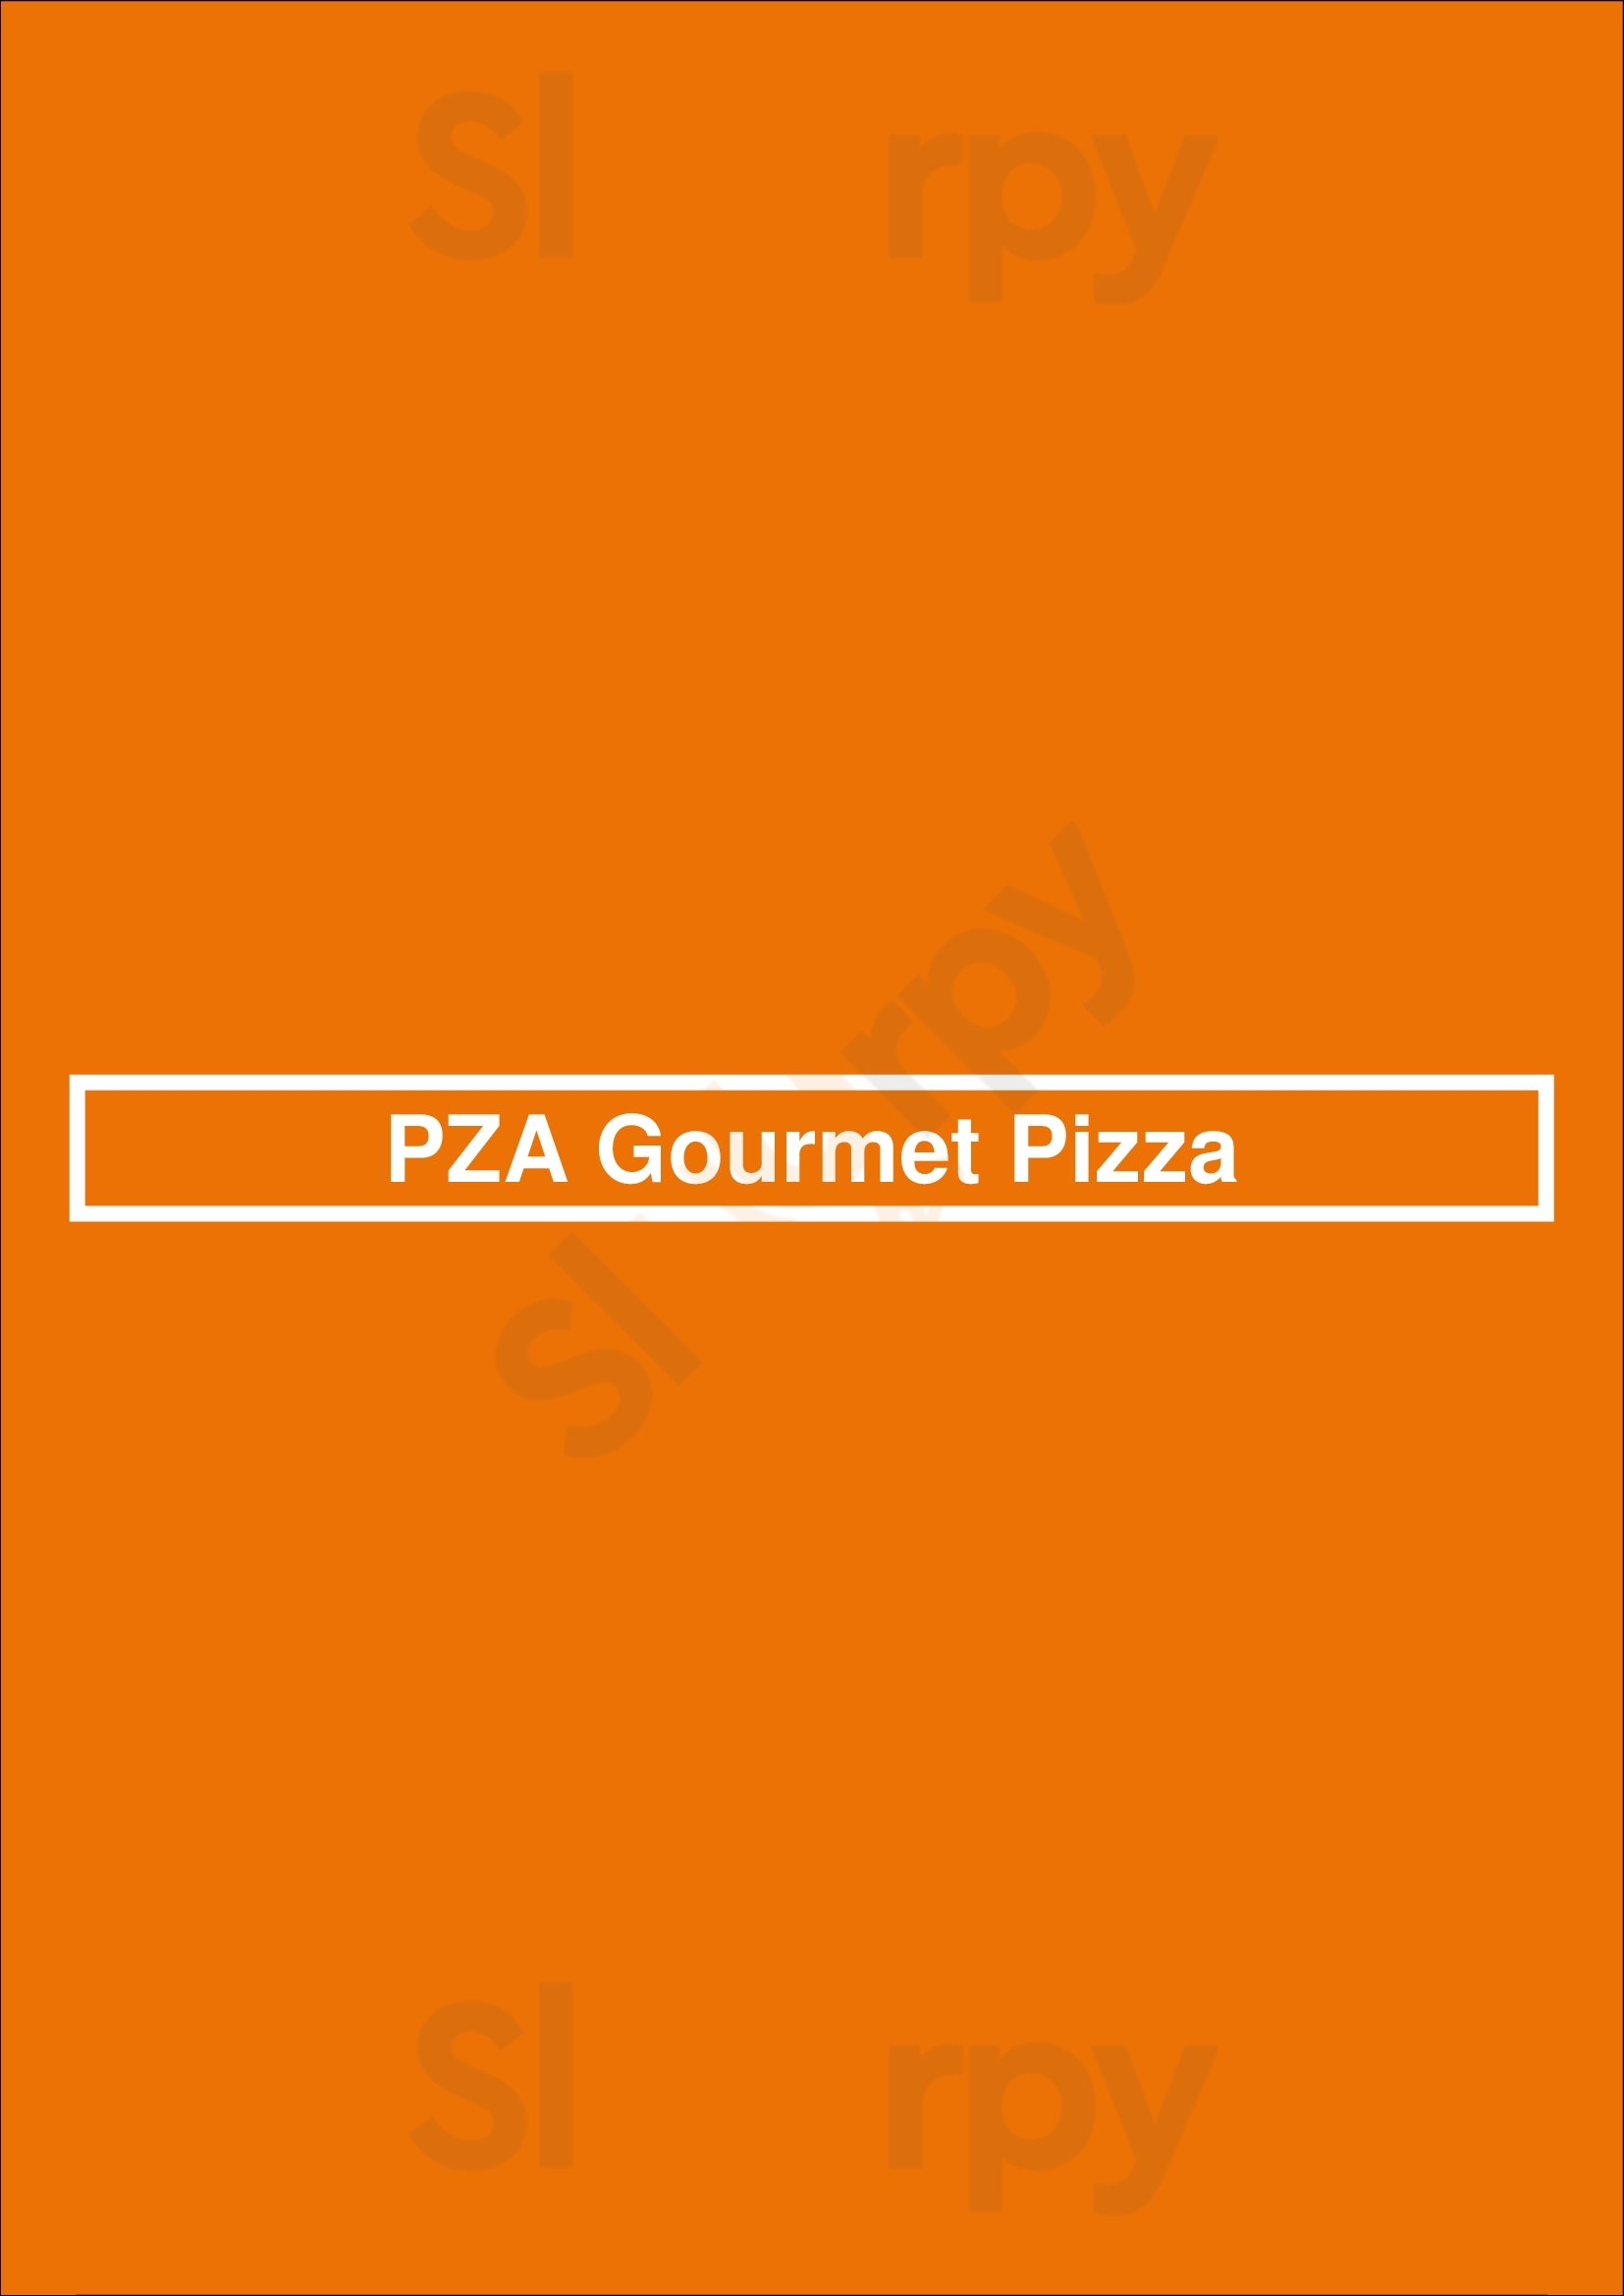 Pza Gourmet Pizza Salem Menu - 1